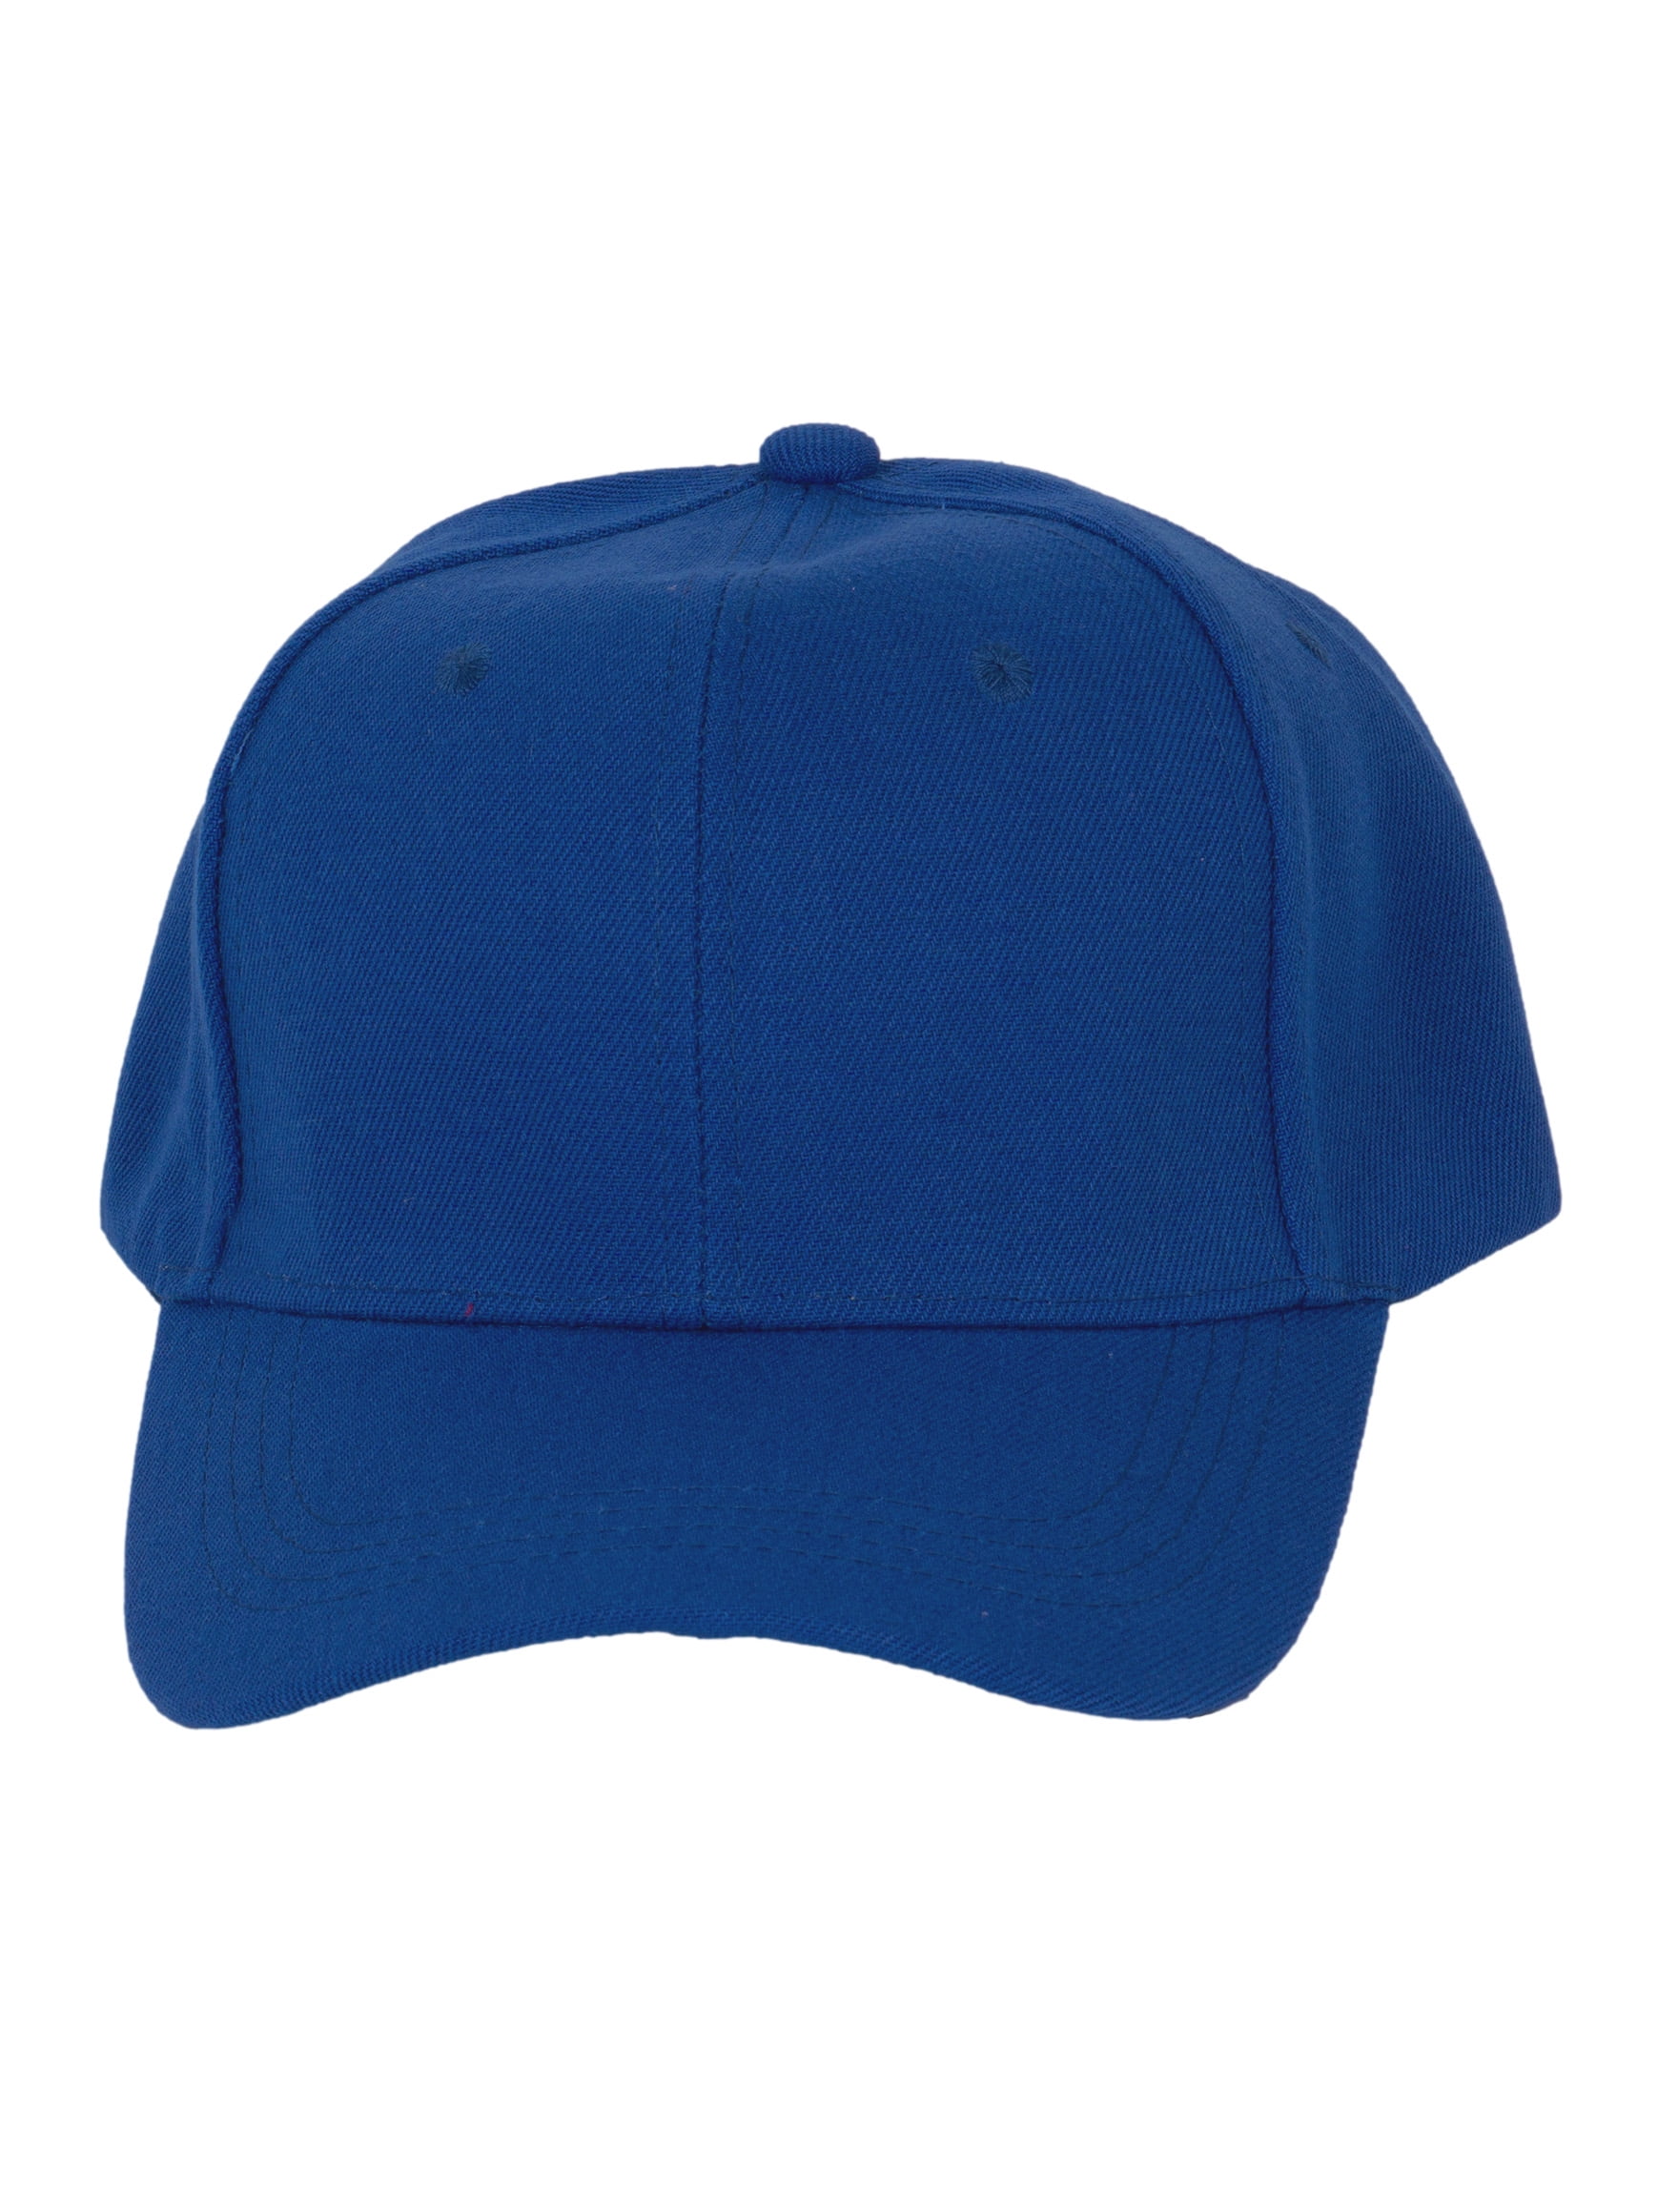 TopHeadwear Men's Plain Baseball Cap - Adjustable Solid Color Ball Hat For  Men or Women Brown 